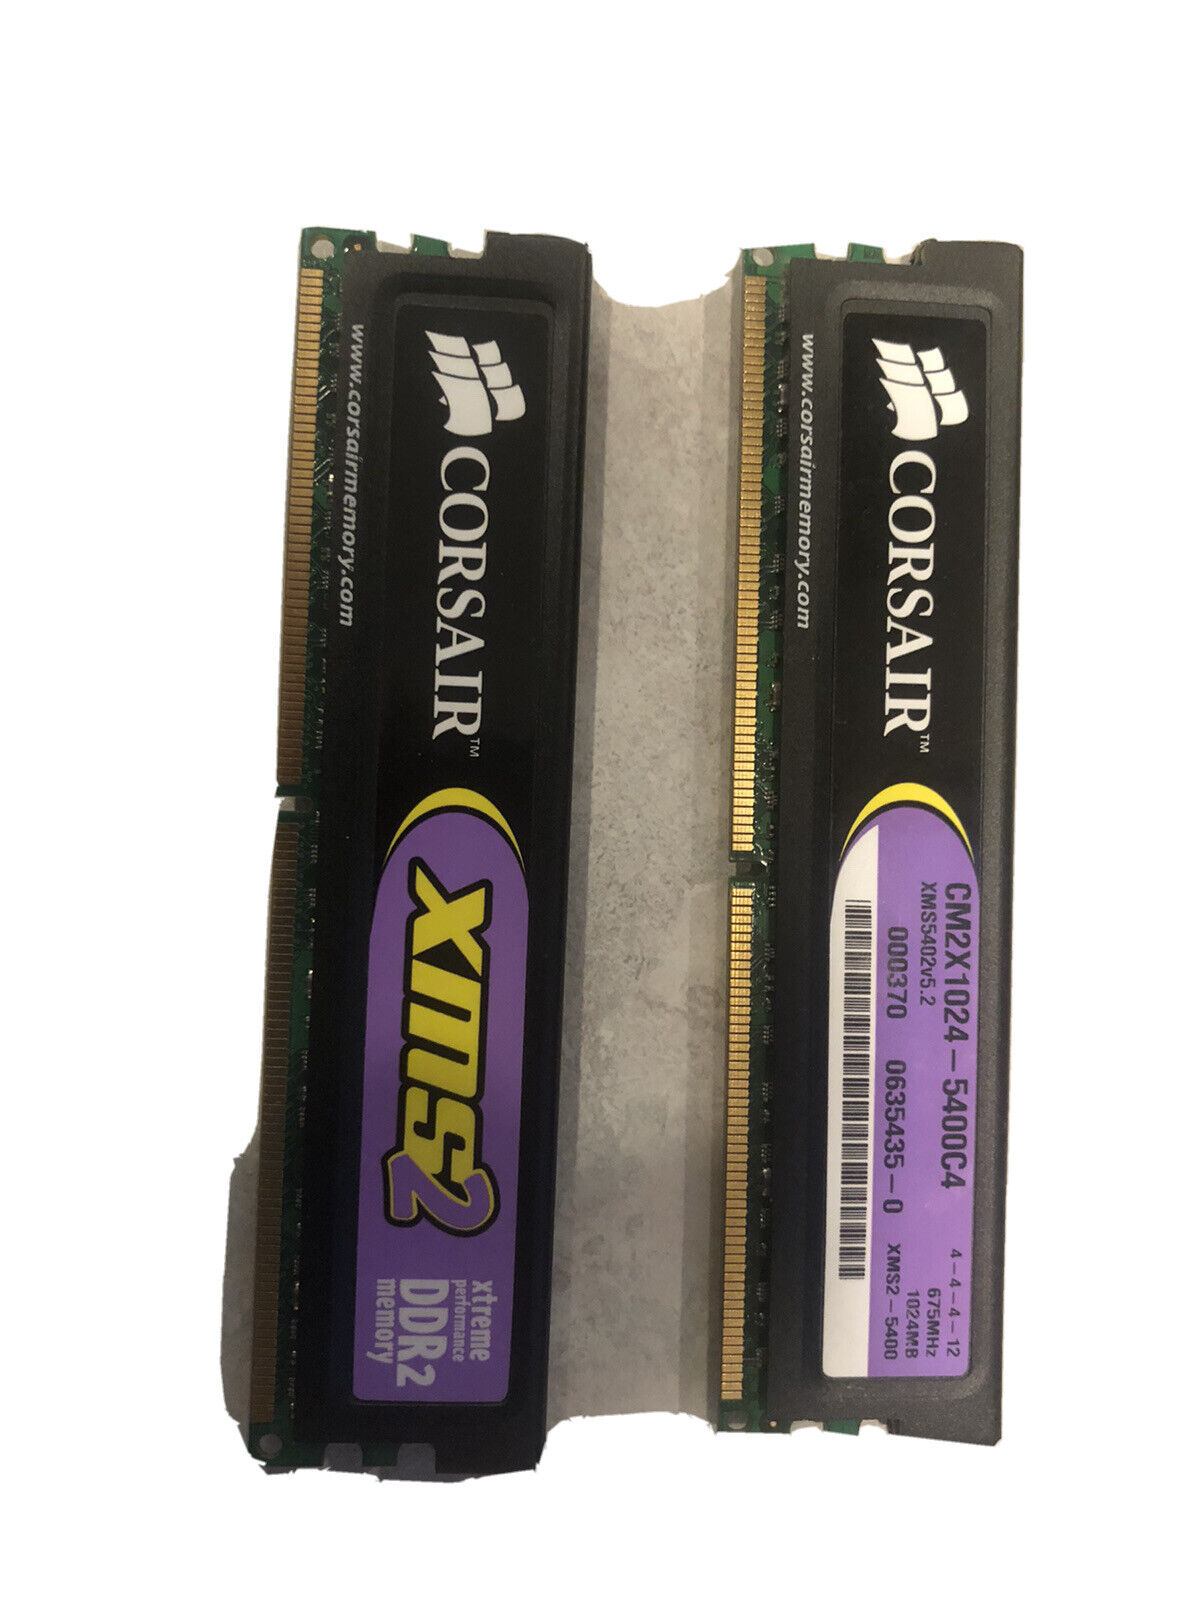   Corsair Platinum  1GB x 2 DDR2 675MHZ  DESKTOP MEMORY 240PIN CM2X1024-5400C4